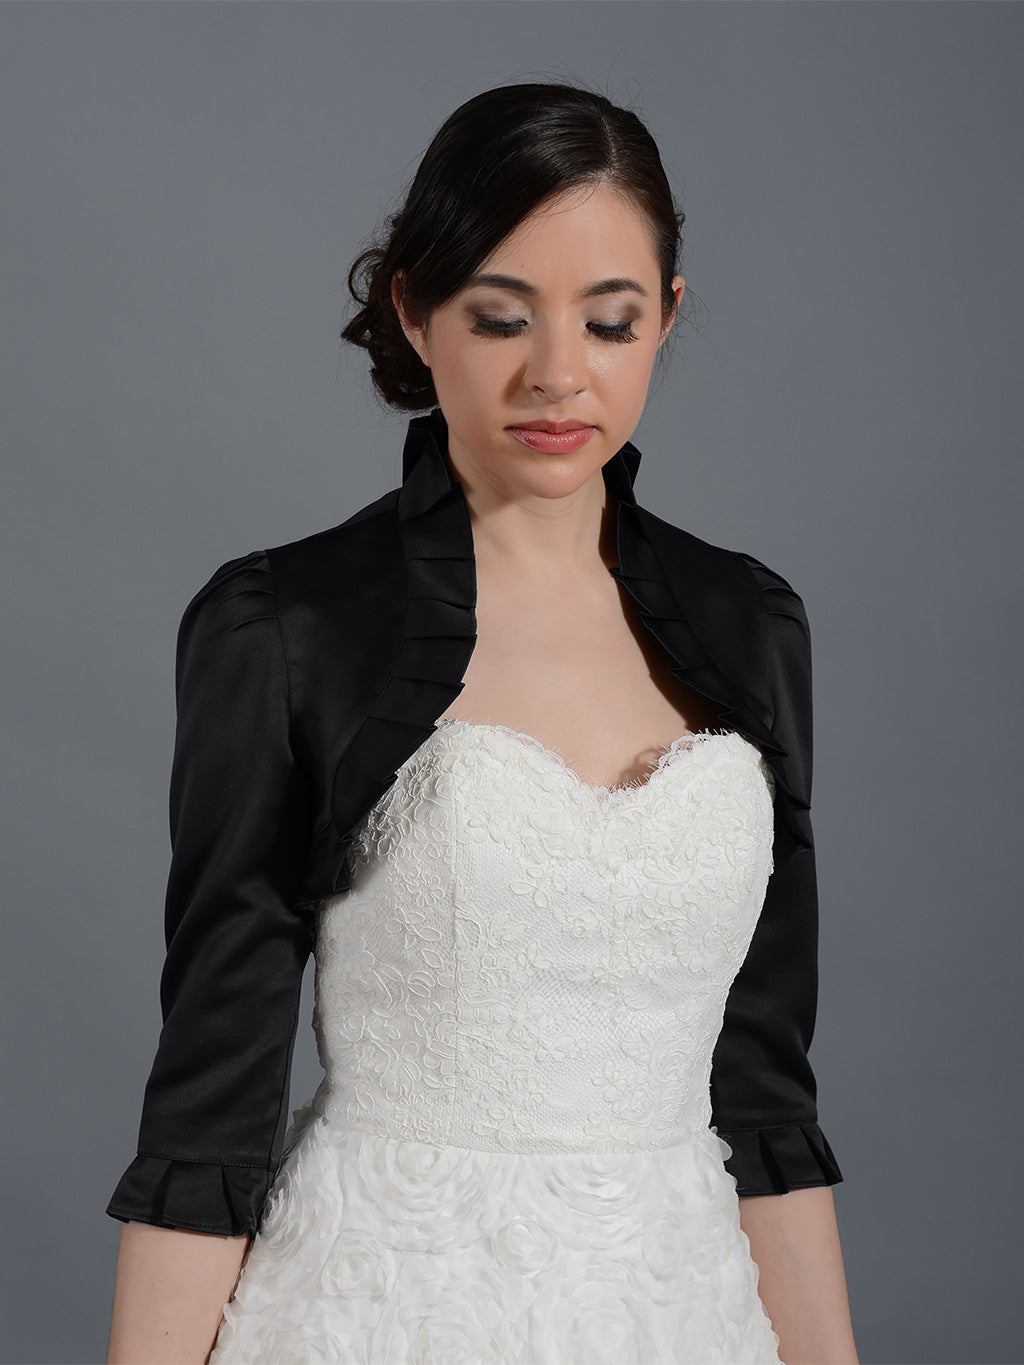 XXL Satin bolero jacket with 34 chiffon sleeves bridal shrug wedding coat cover up SBA116 AVL in navy blue and 5 other colors Small